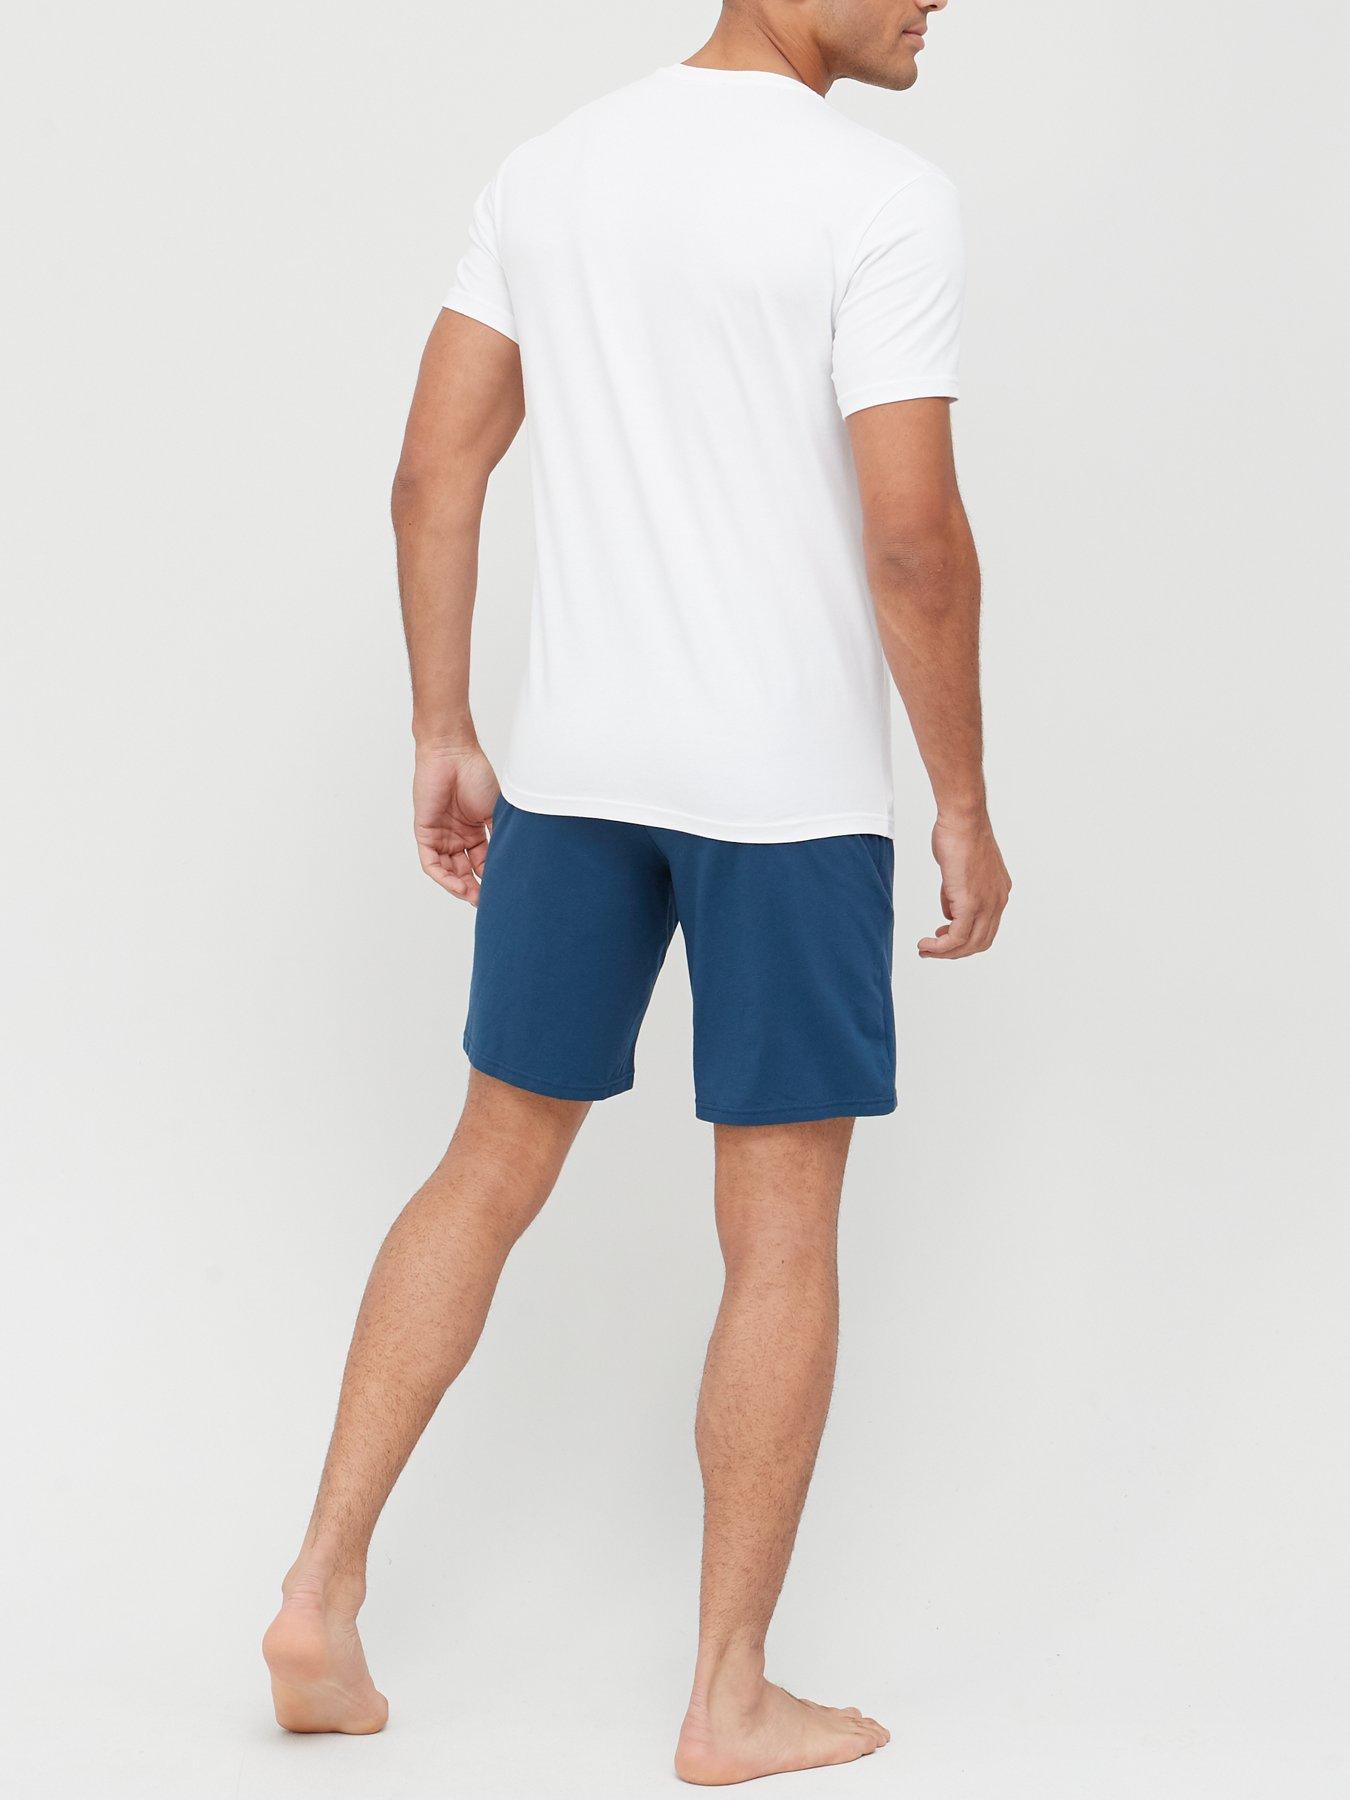  Endurance Lounge T-Shirt And Short Set - Blue/White